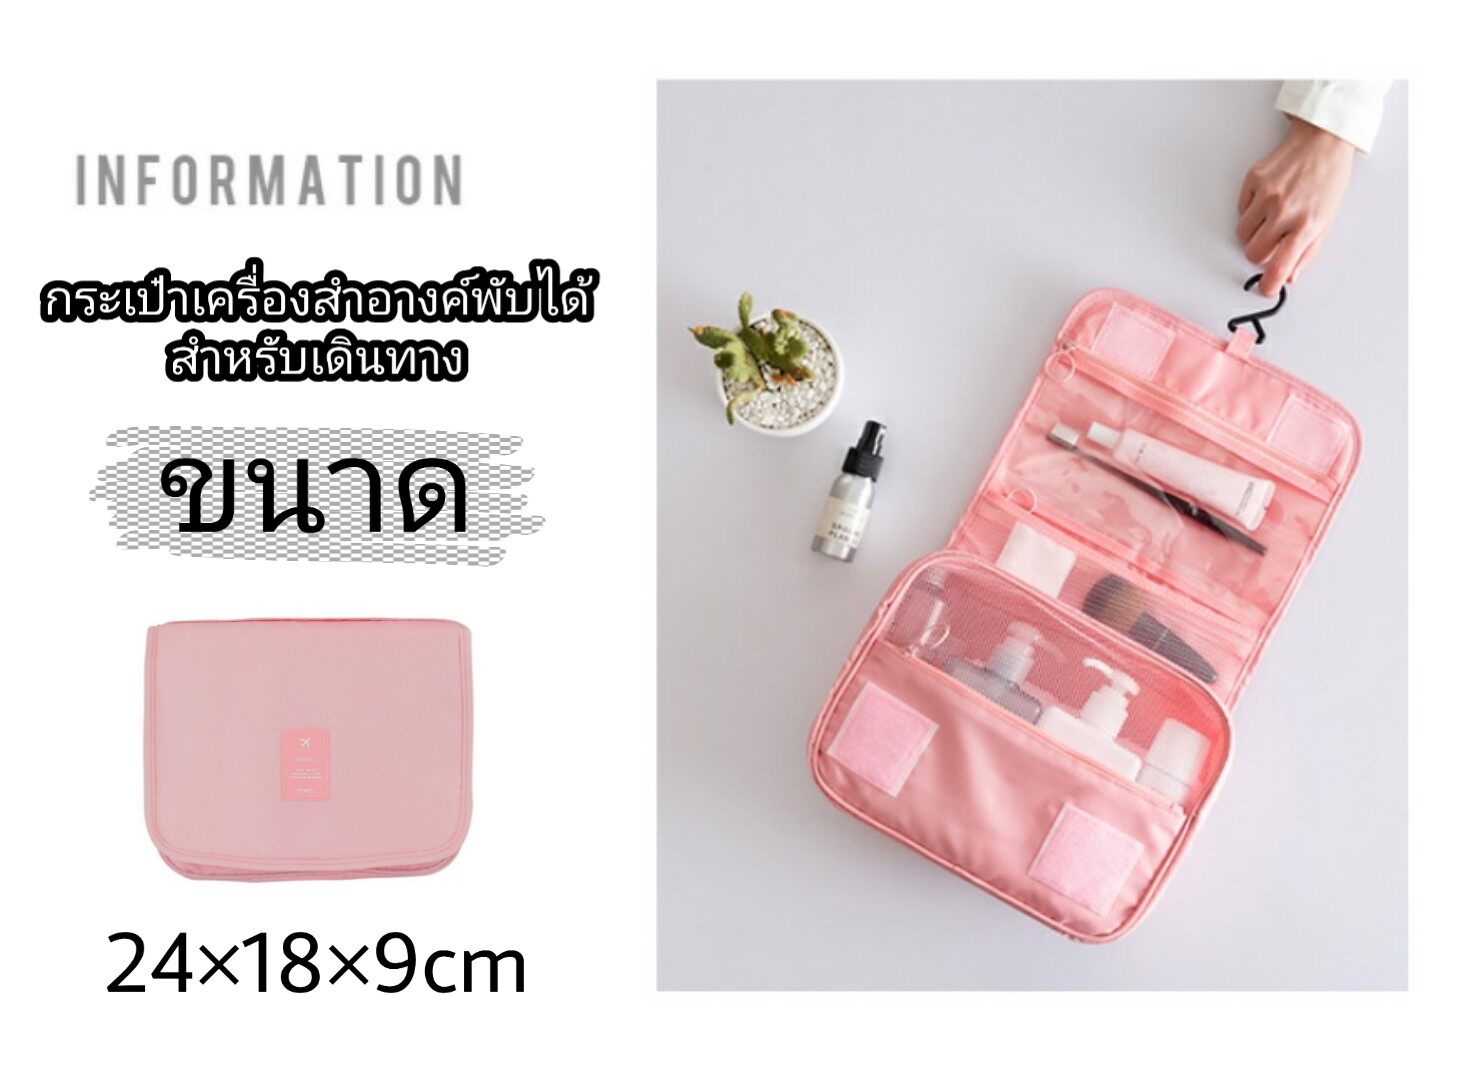 New!! กระเป๋าแขวนพกพา กระเป๋าเครื่องสำอางค์พับได้ กระเป๋าใส่อุปกรณ์อาบน้ำ พกพา พับได้แขวนได้ พกพาได้ทุกที่ ที่เดินทาง Chill Fyn (สต๊อกในไทย) สี สีกรม สี สีกรม